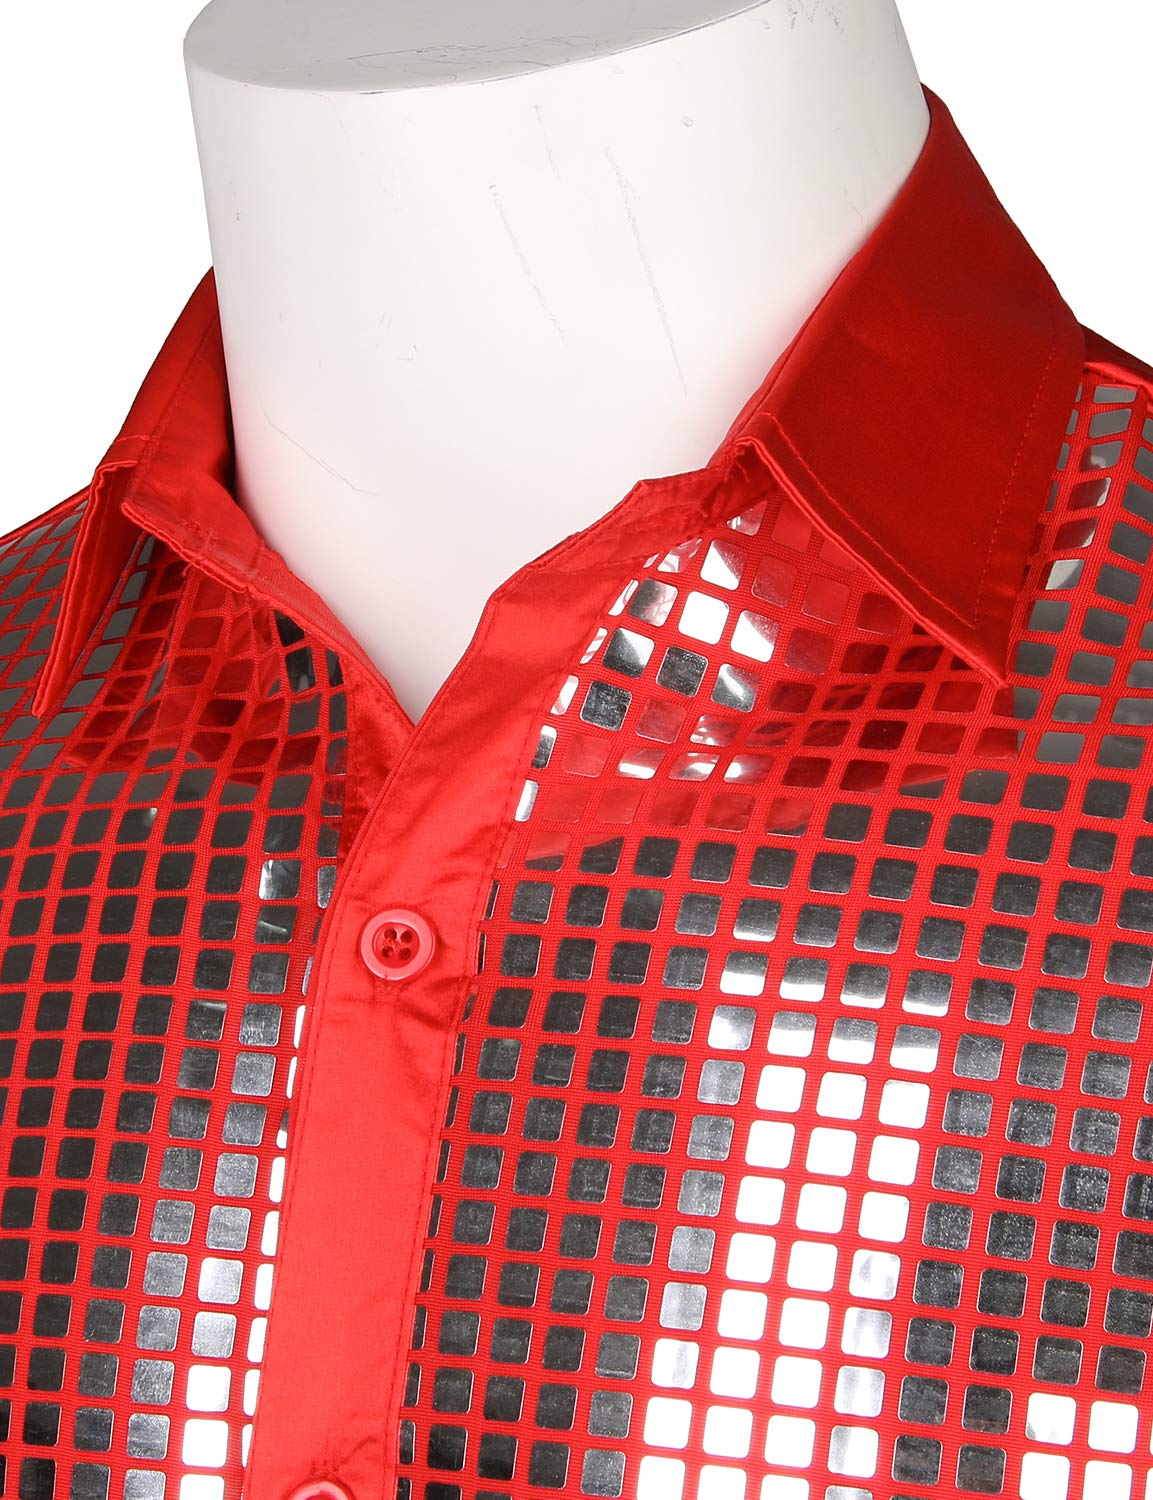 Men's Red Metallic Sequin Shiny Short Sleeve Shirt